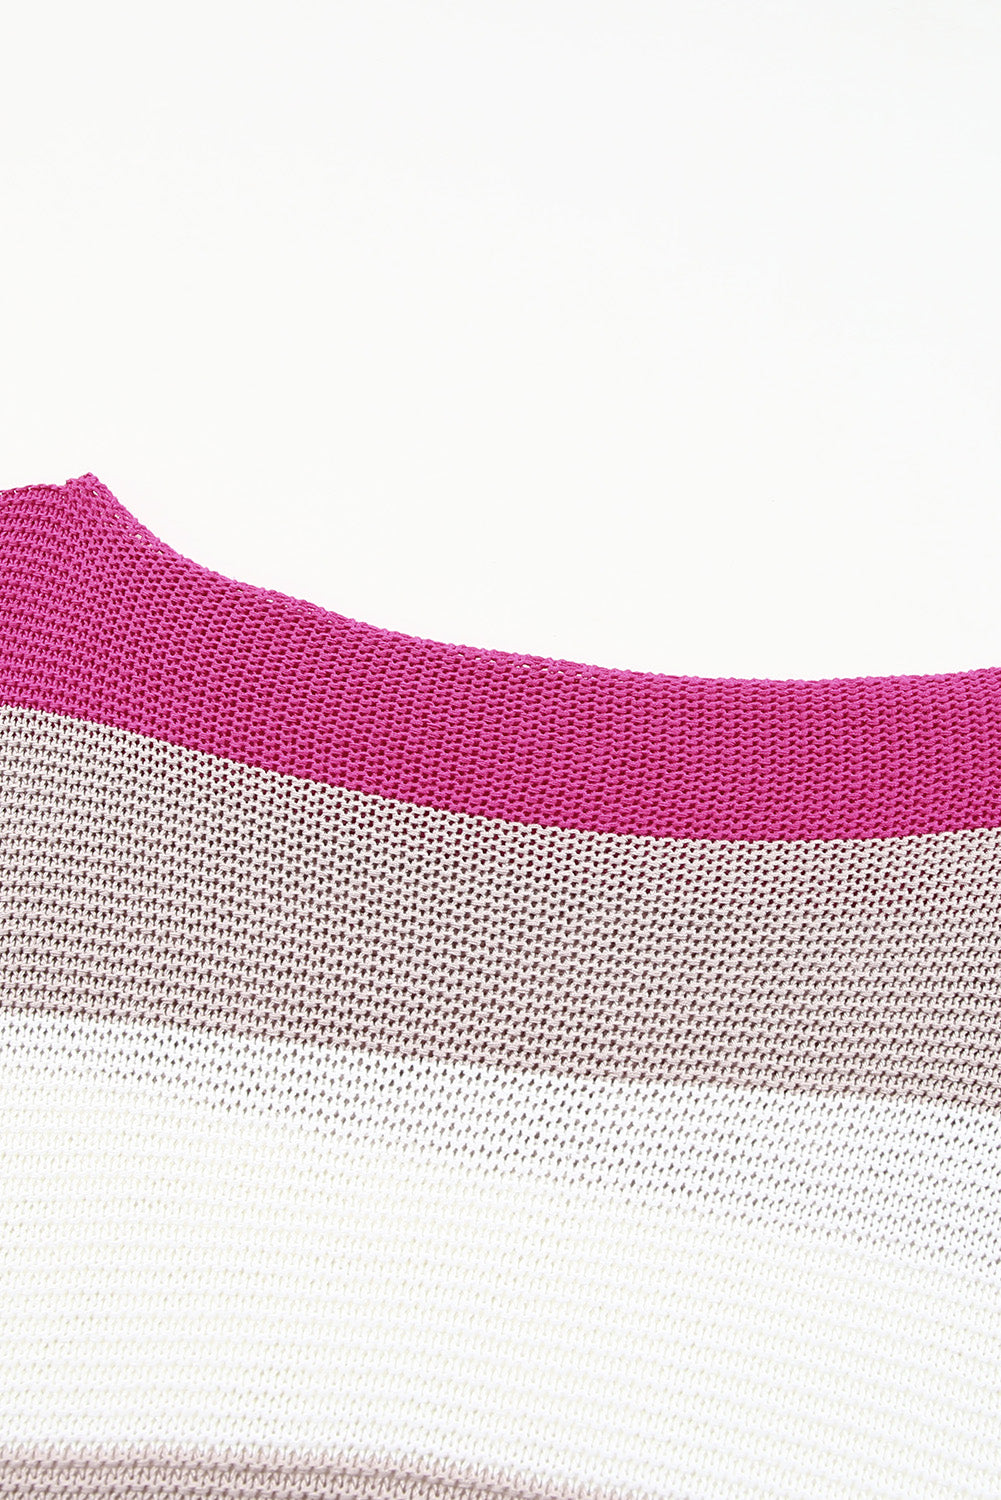 Rose Contrast Stripe Half Sleeve Knit Top